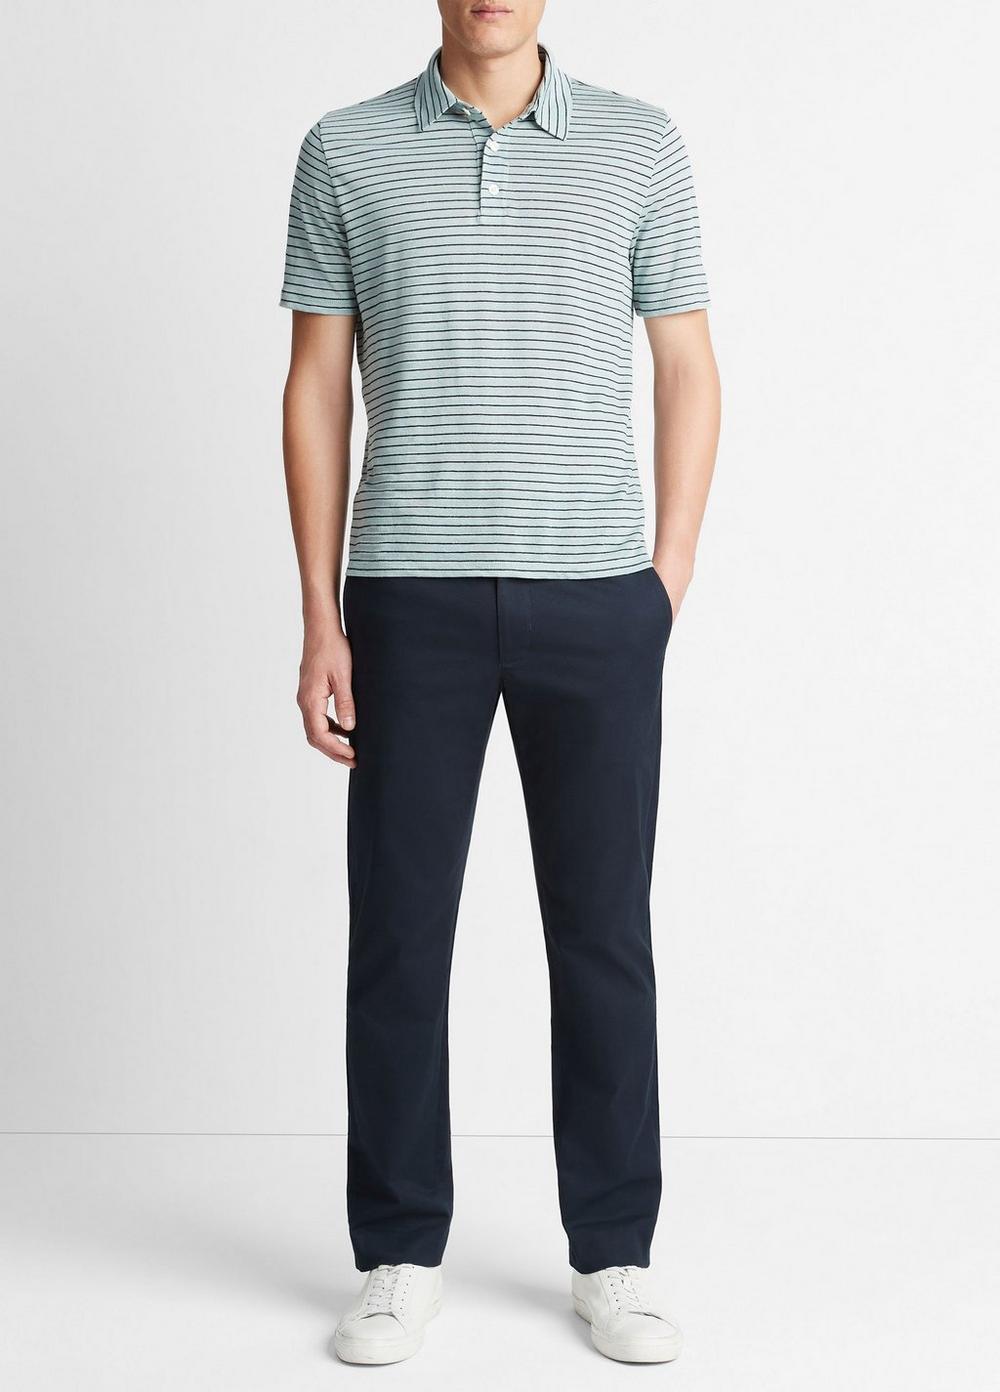 Striped Linen Short-Sleeve Polo Shirt, Ceramic Blue/coastal Blue, Size XL Vince